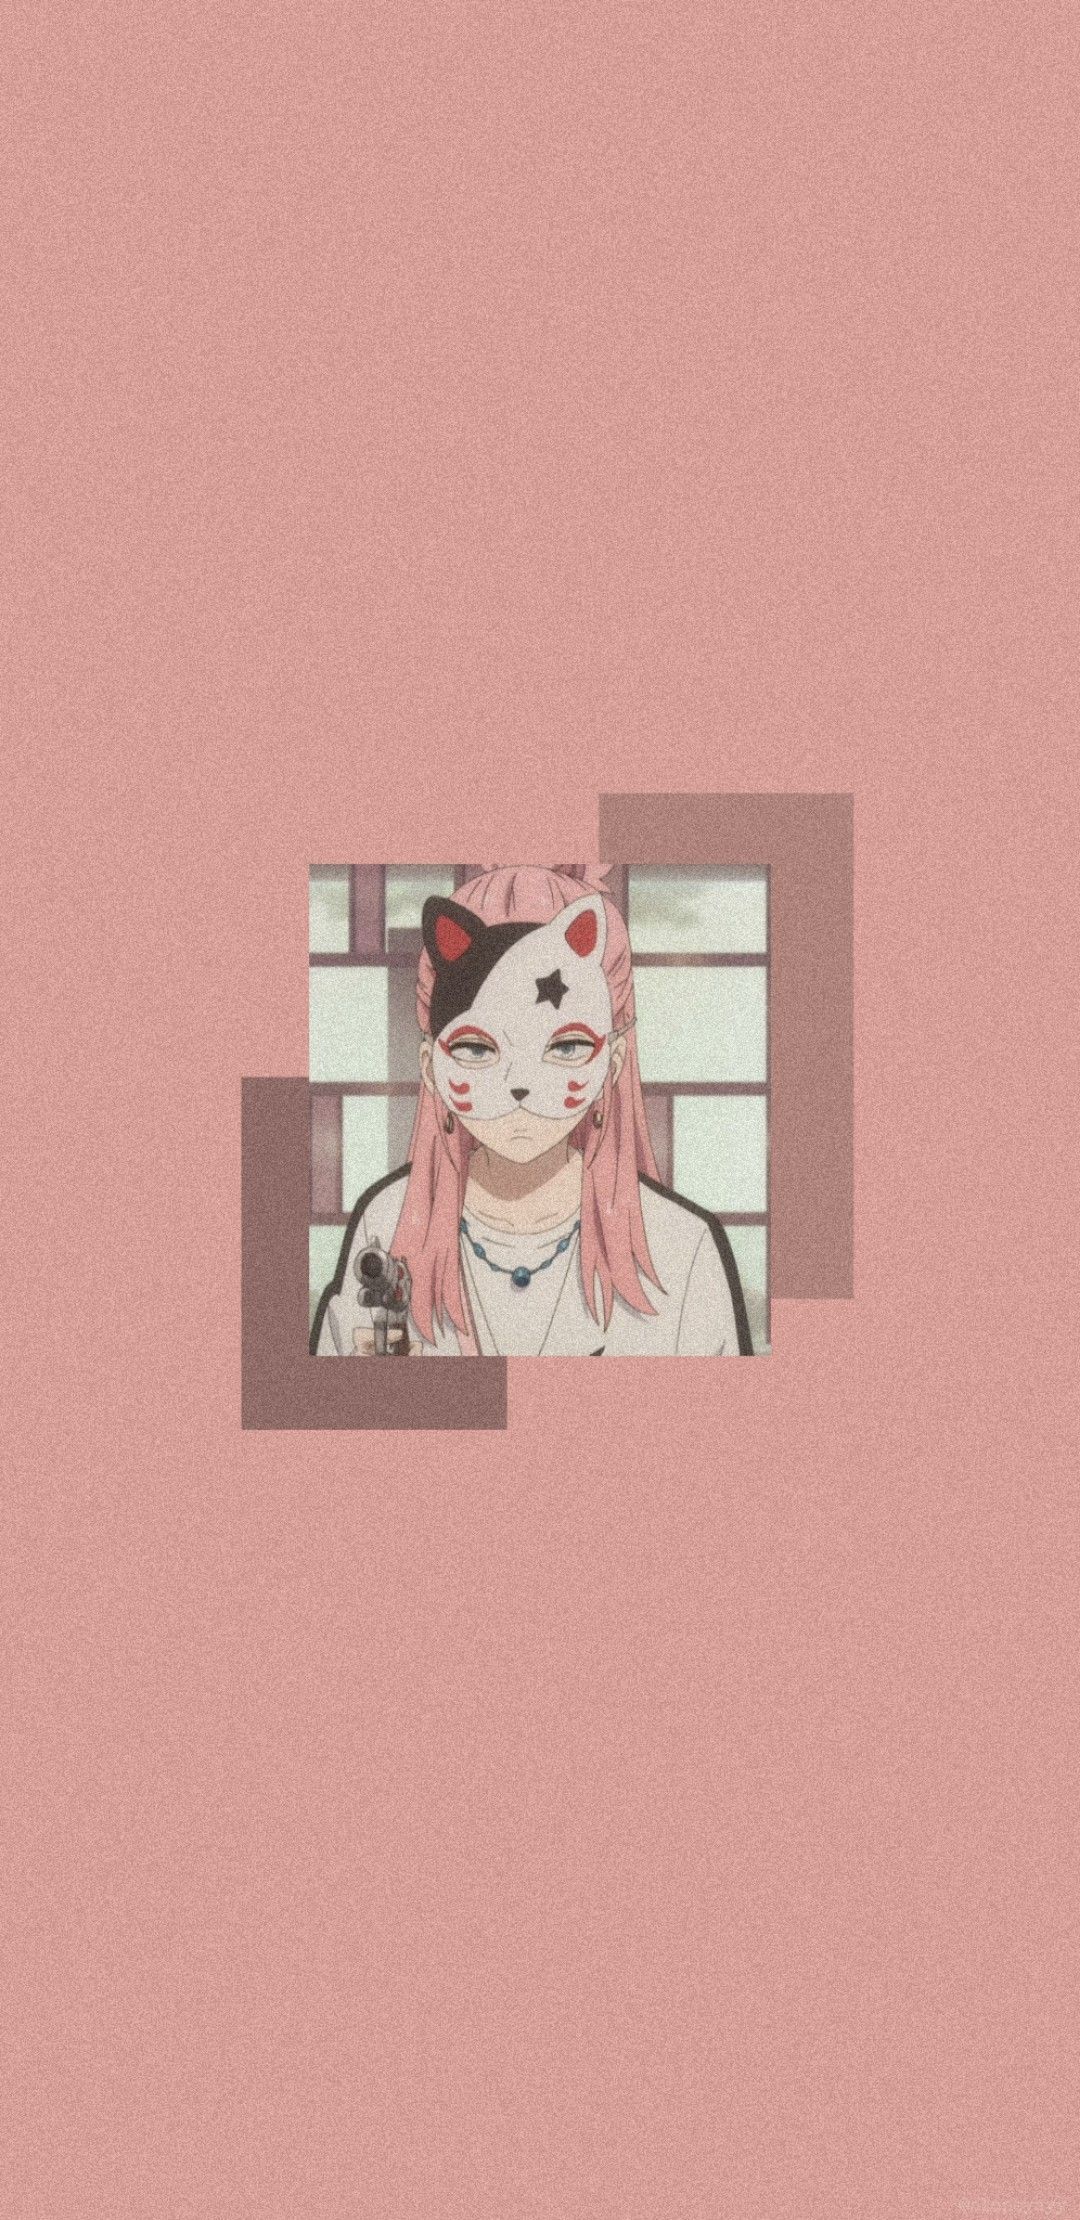 Anime aesthetic background wallpaper phone background cat girl pink aesthetic background wallpaper phone background cat girl pink - Pink